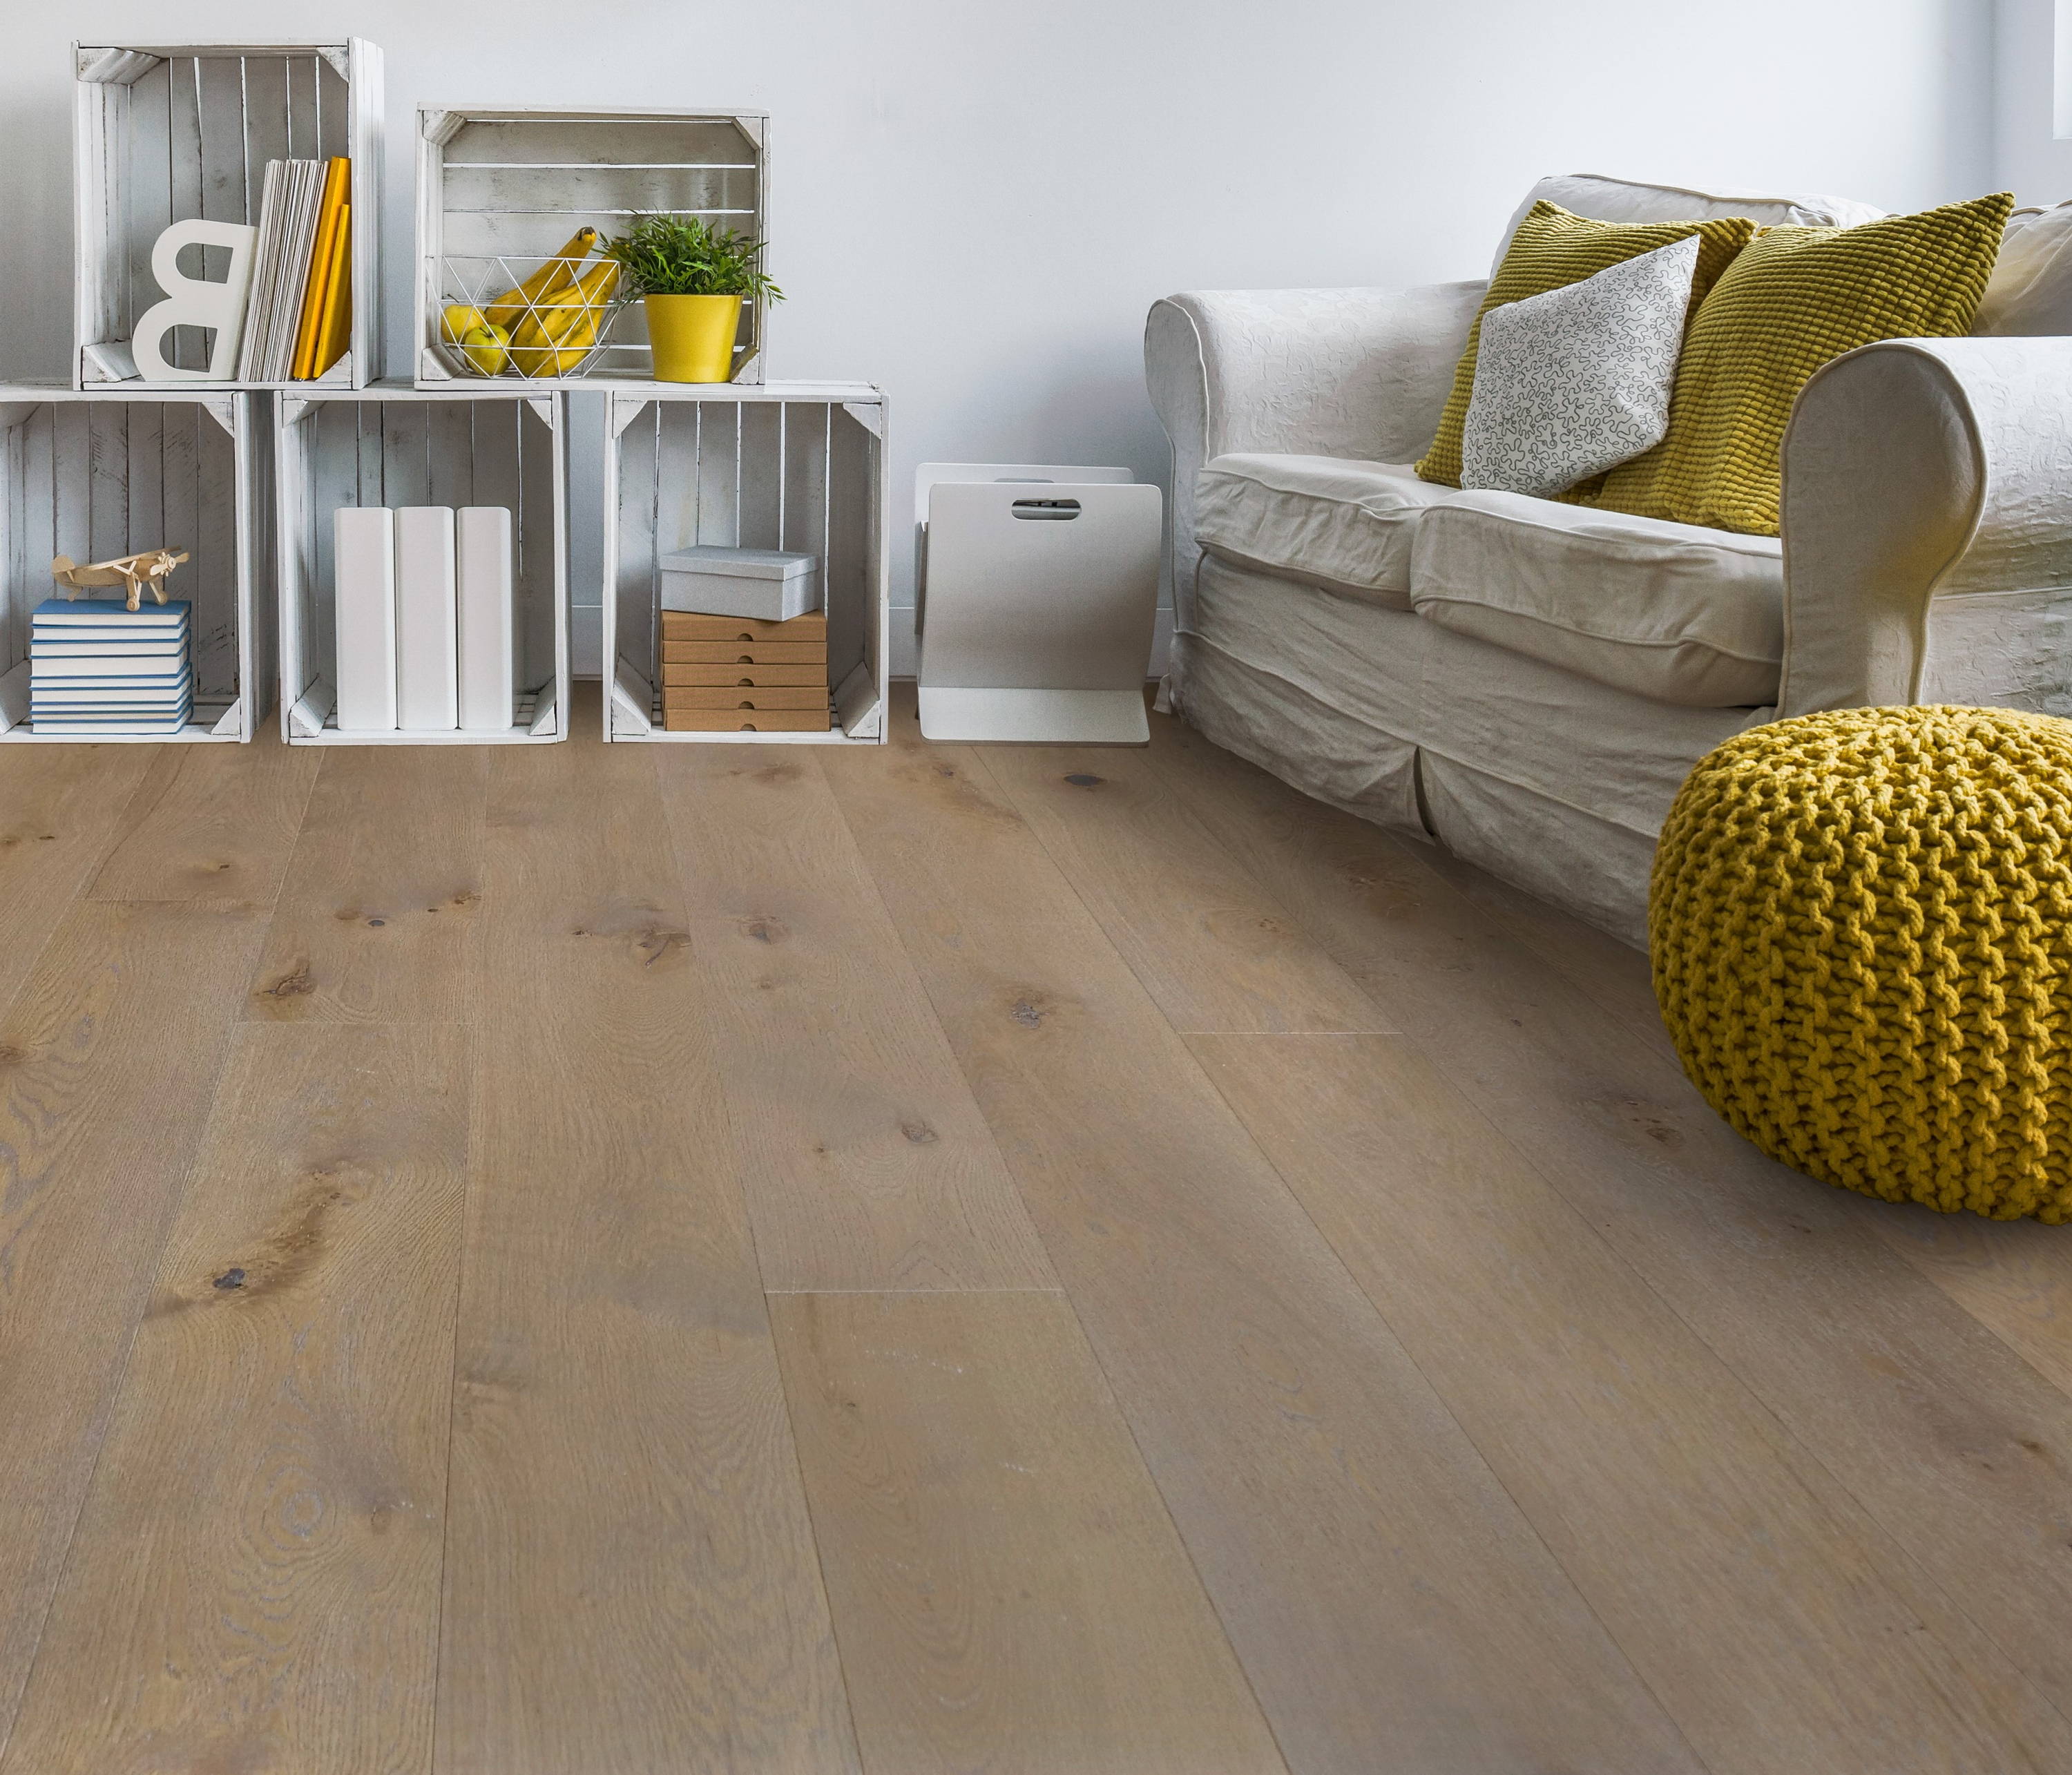 Hardwood Flooring Increase, Do Hardwood Floors Increase Home Value